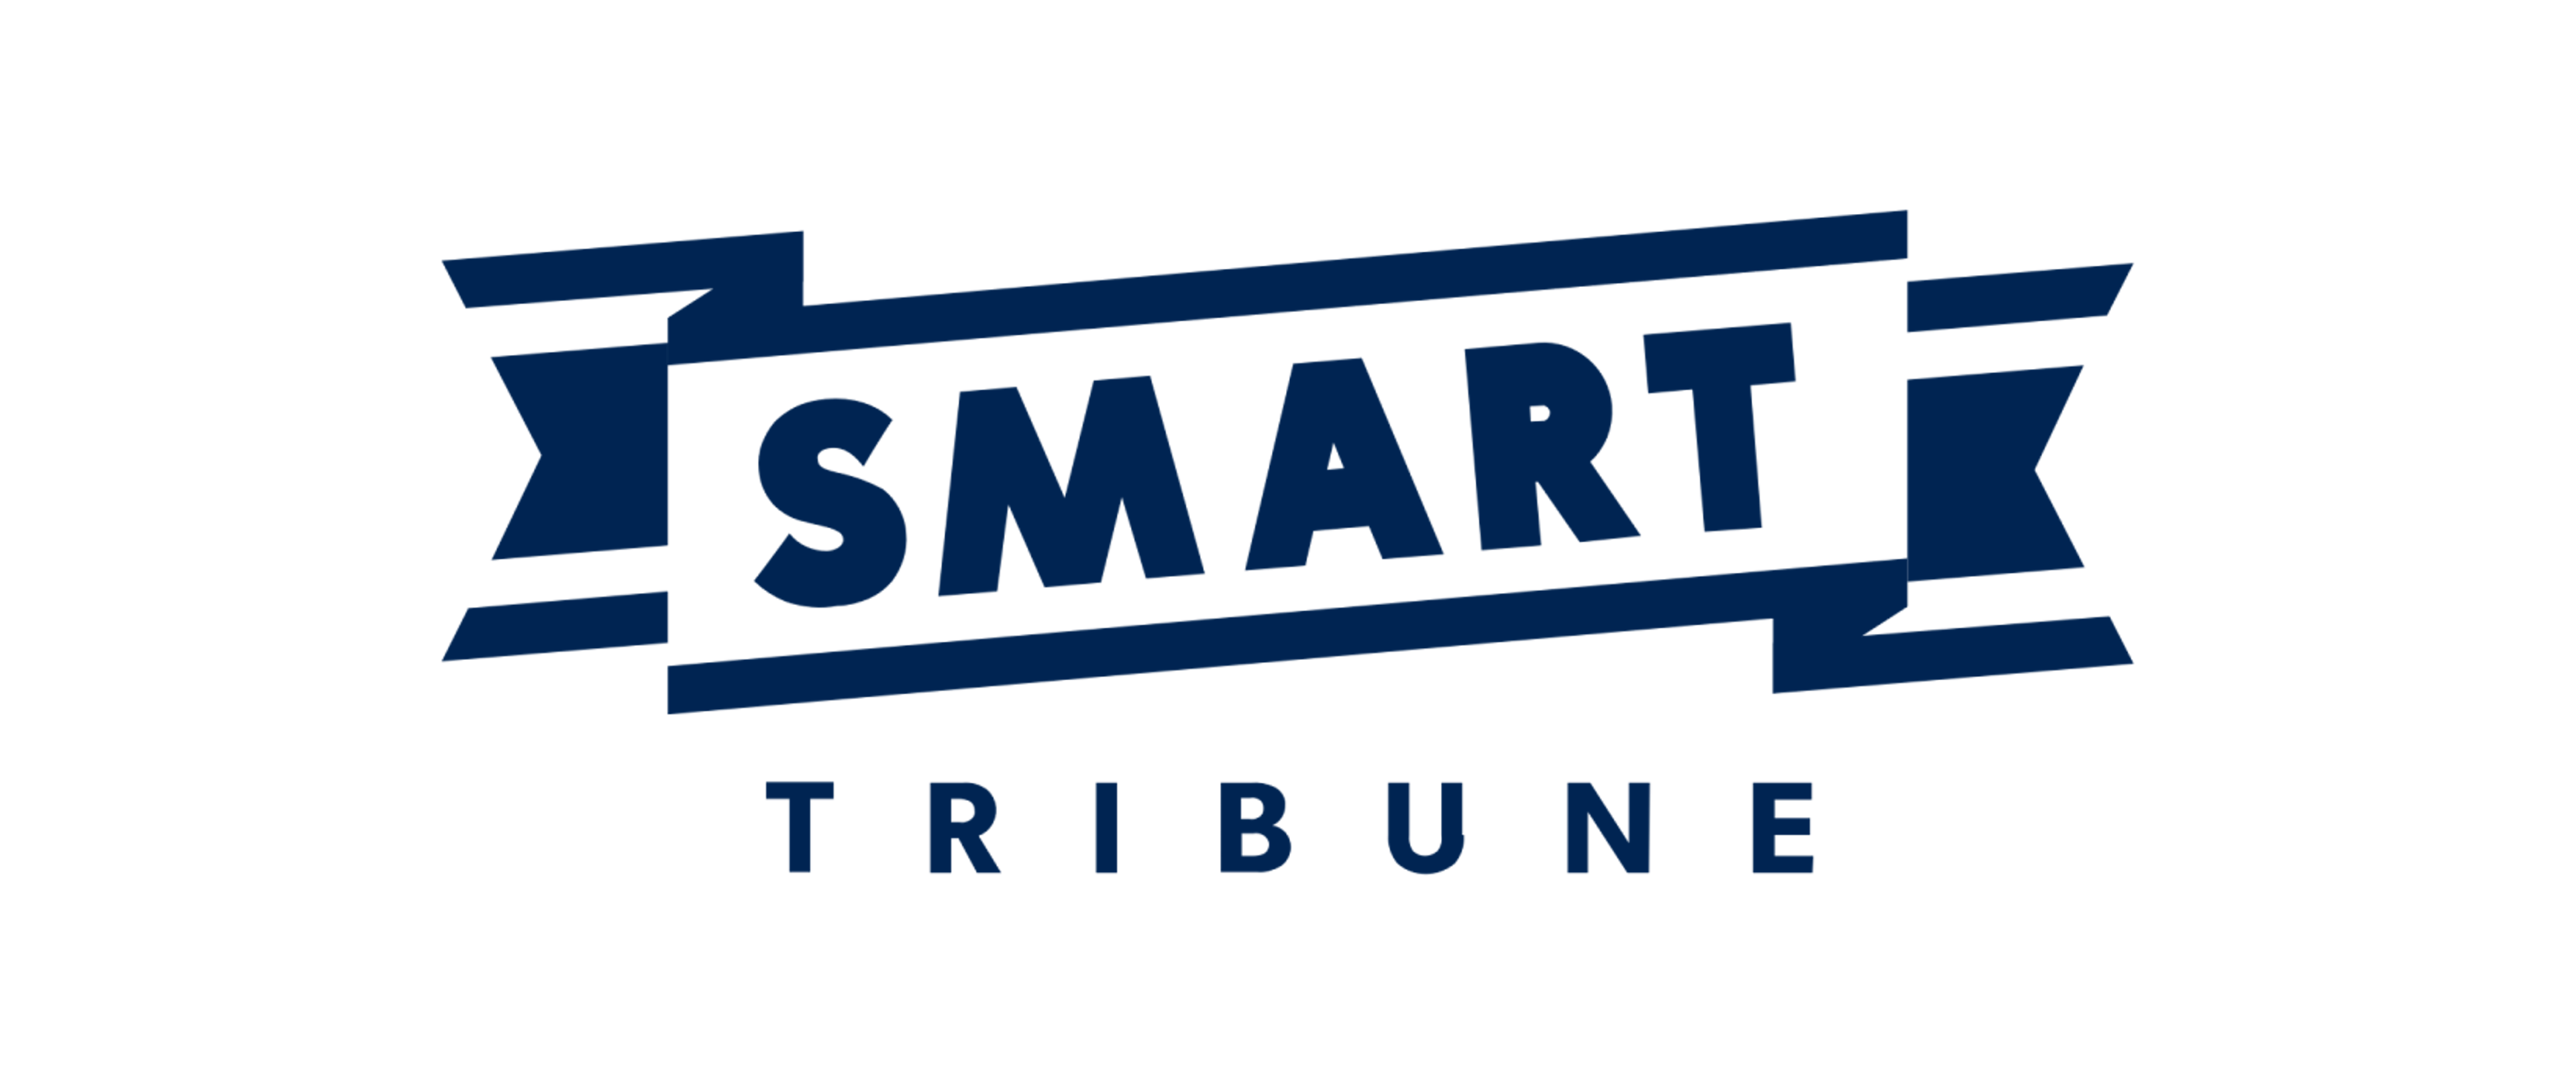 Smart Tribune Logo